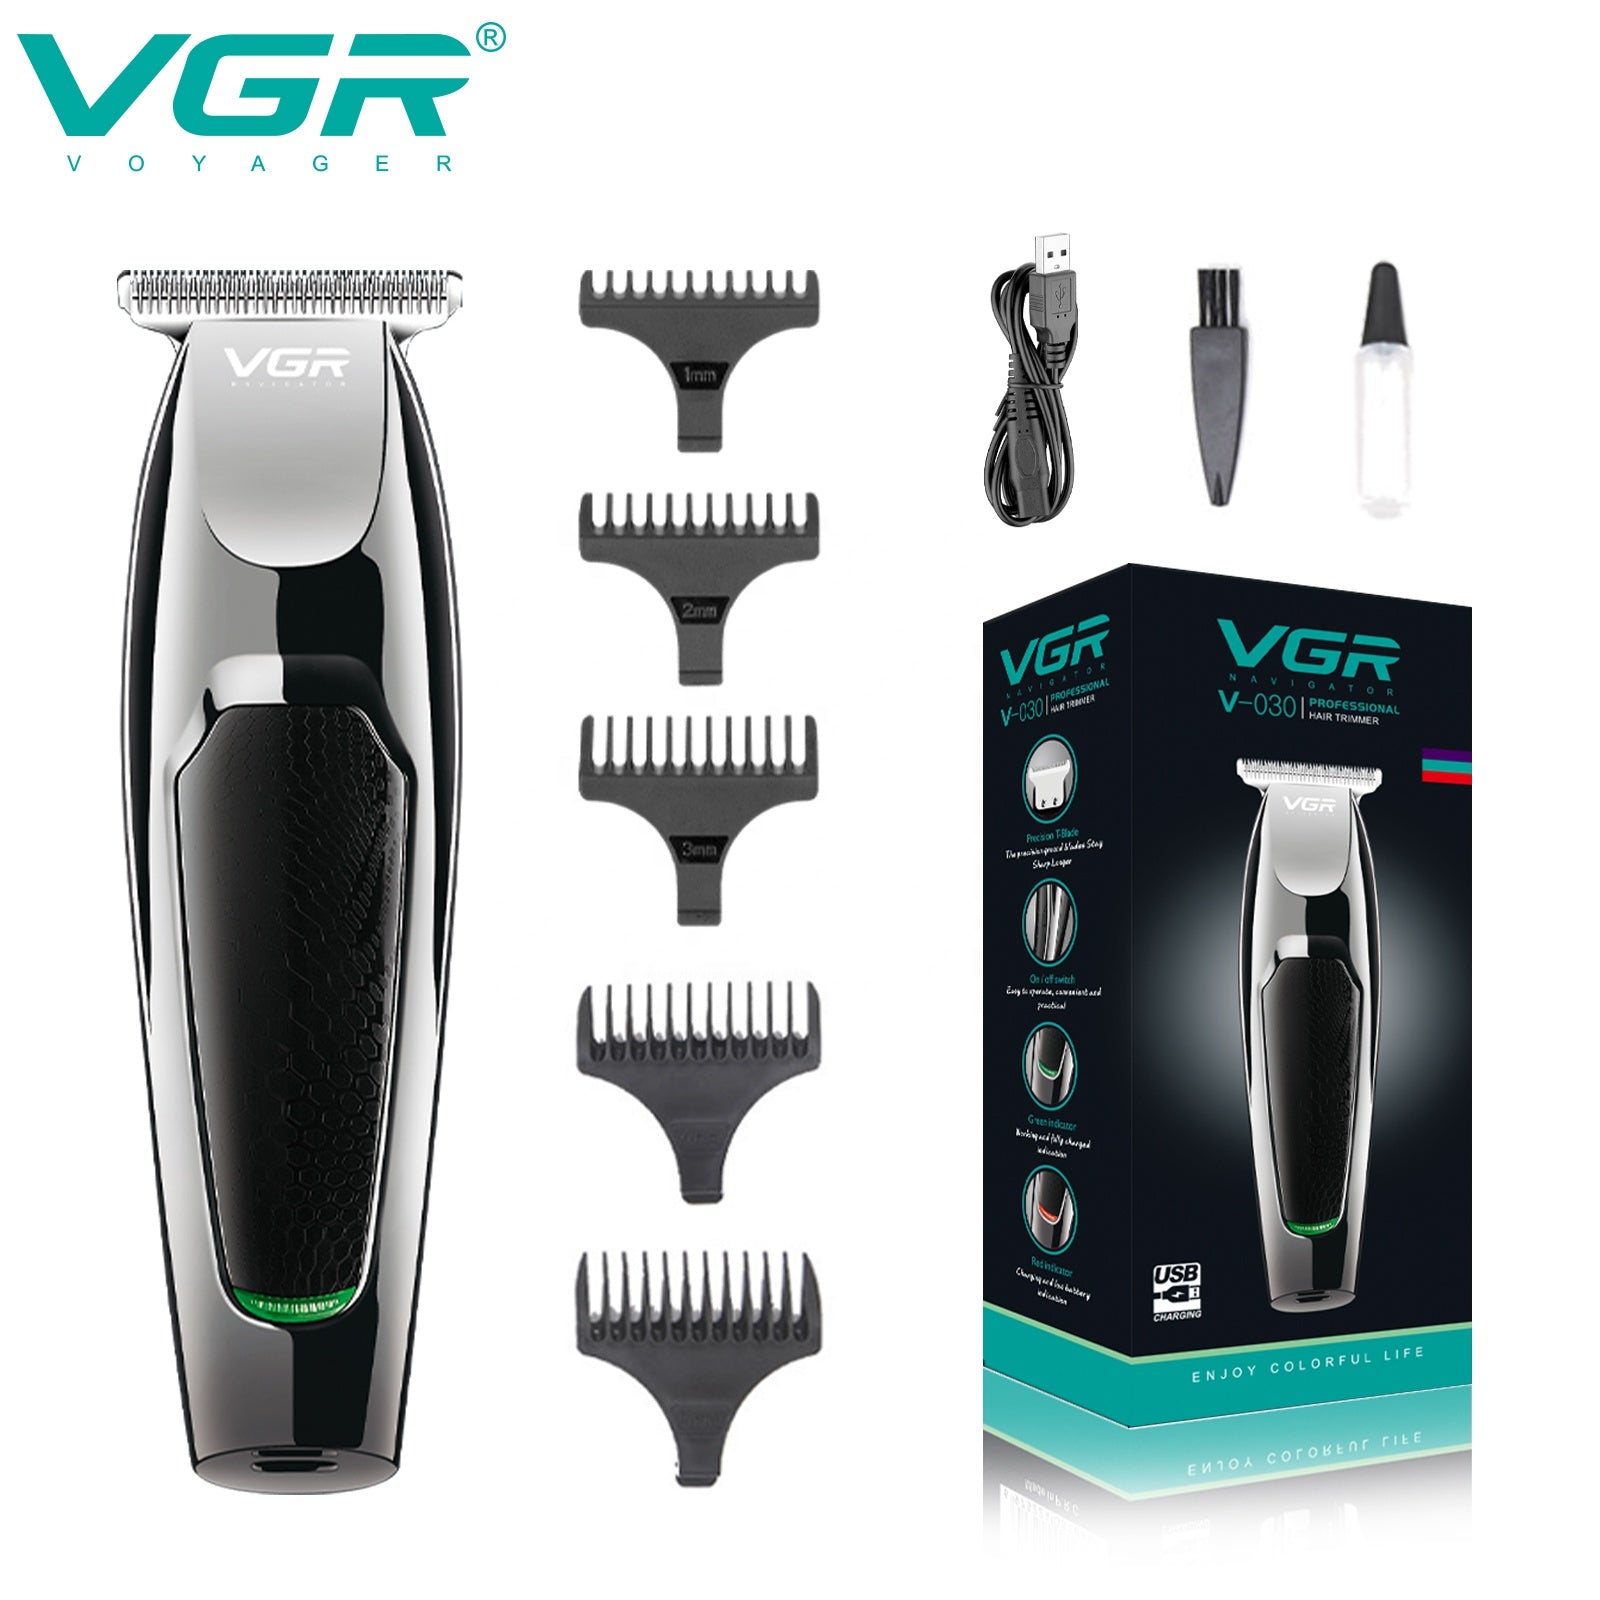 VGR Professional Beard & Hair Trimmer